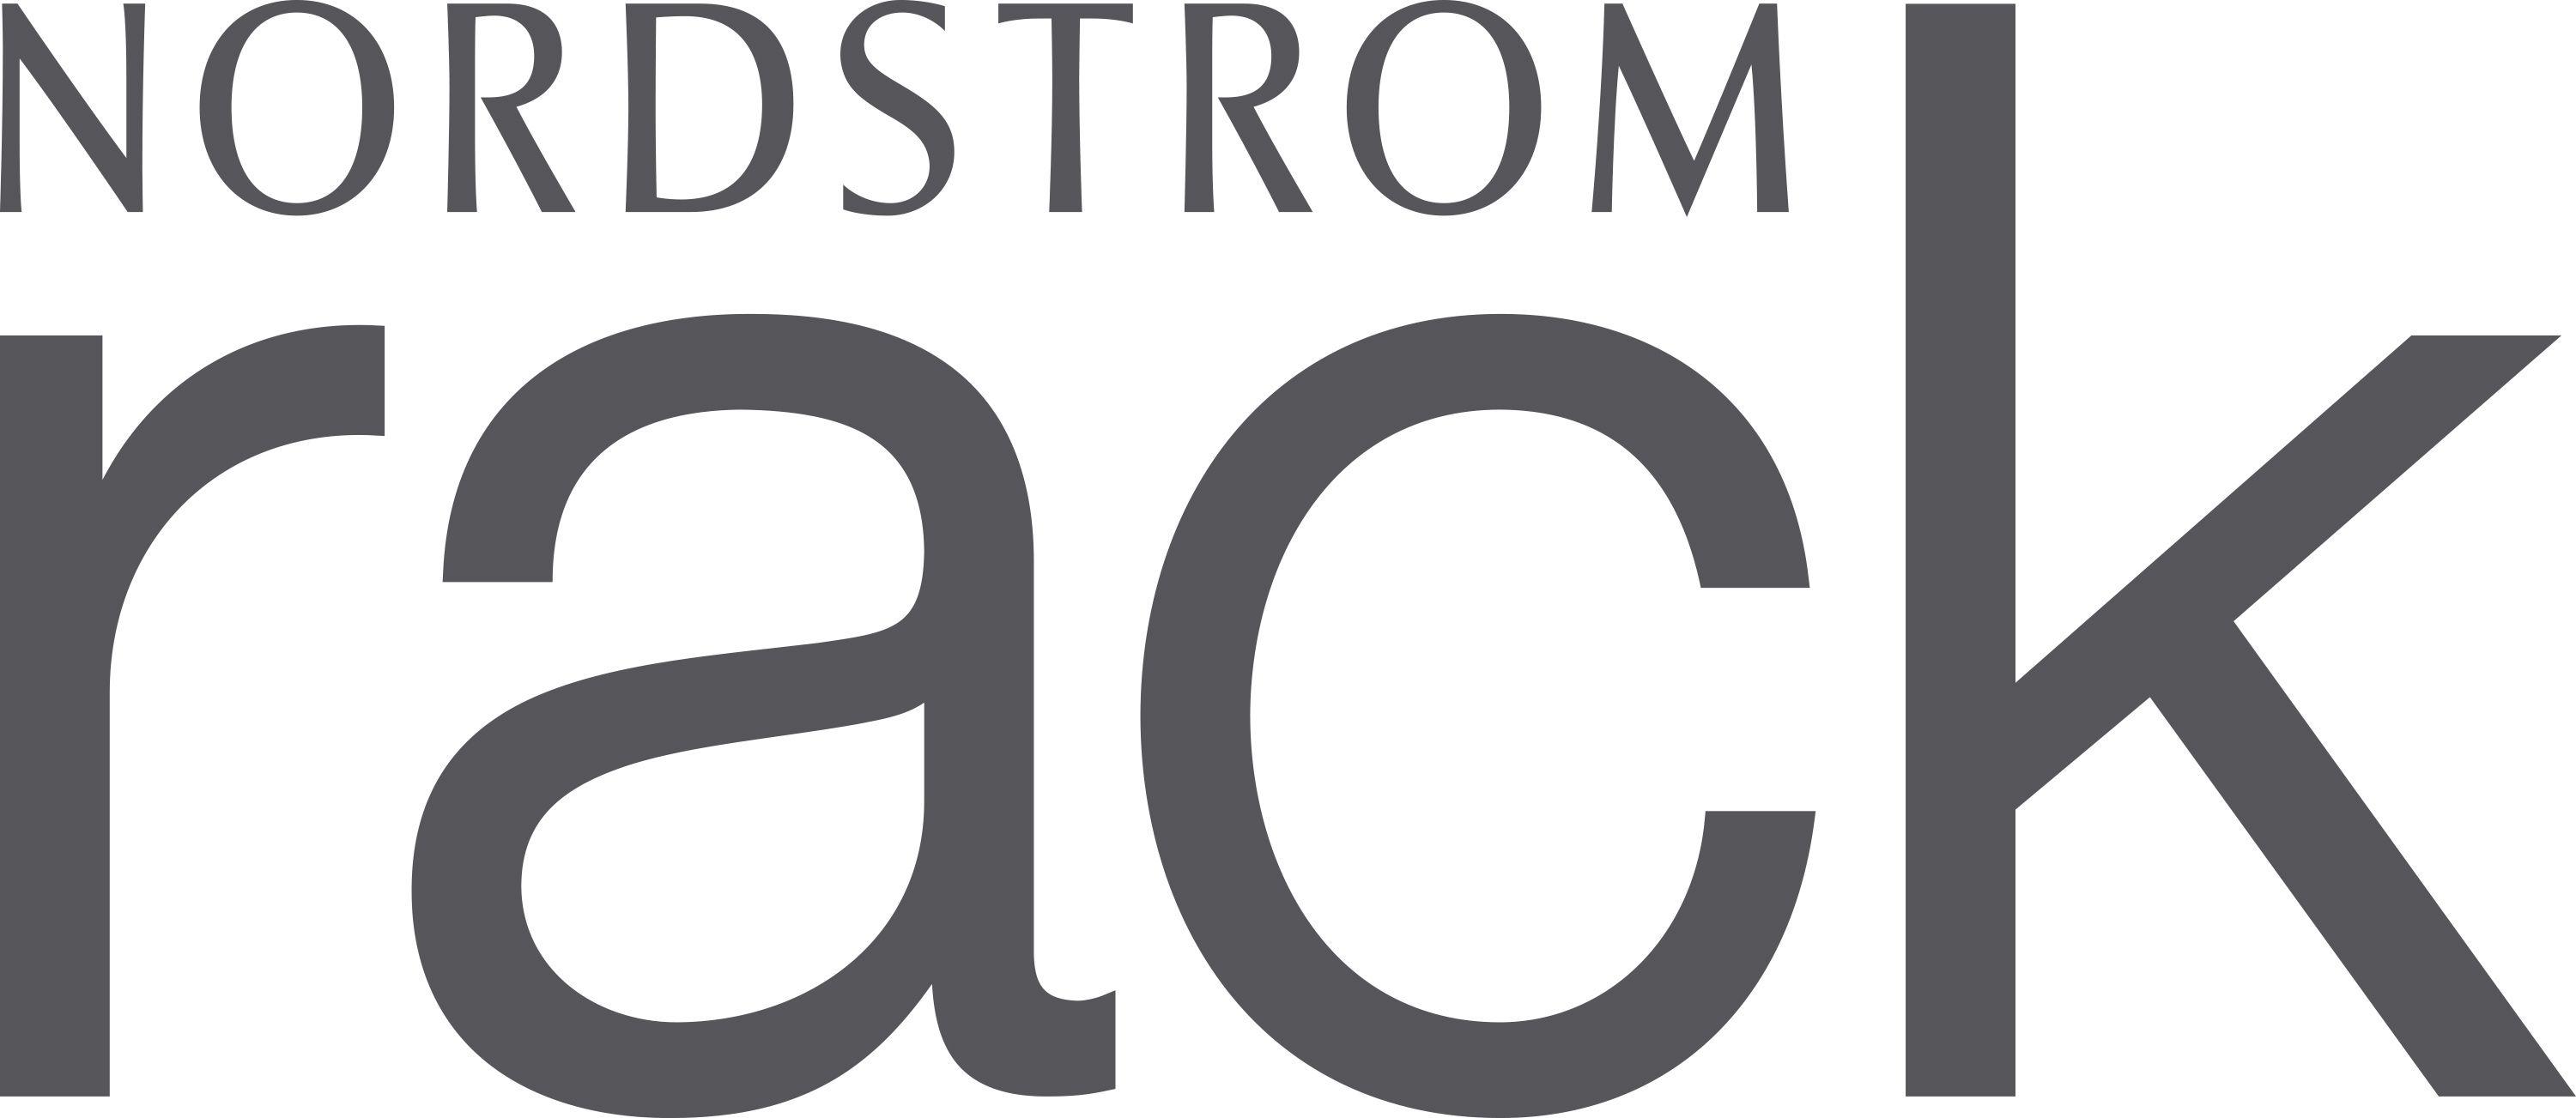 Nordstrom Rack Logo - Nordstrom Rack